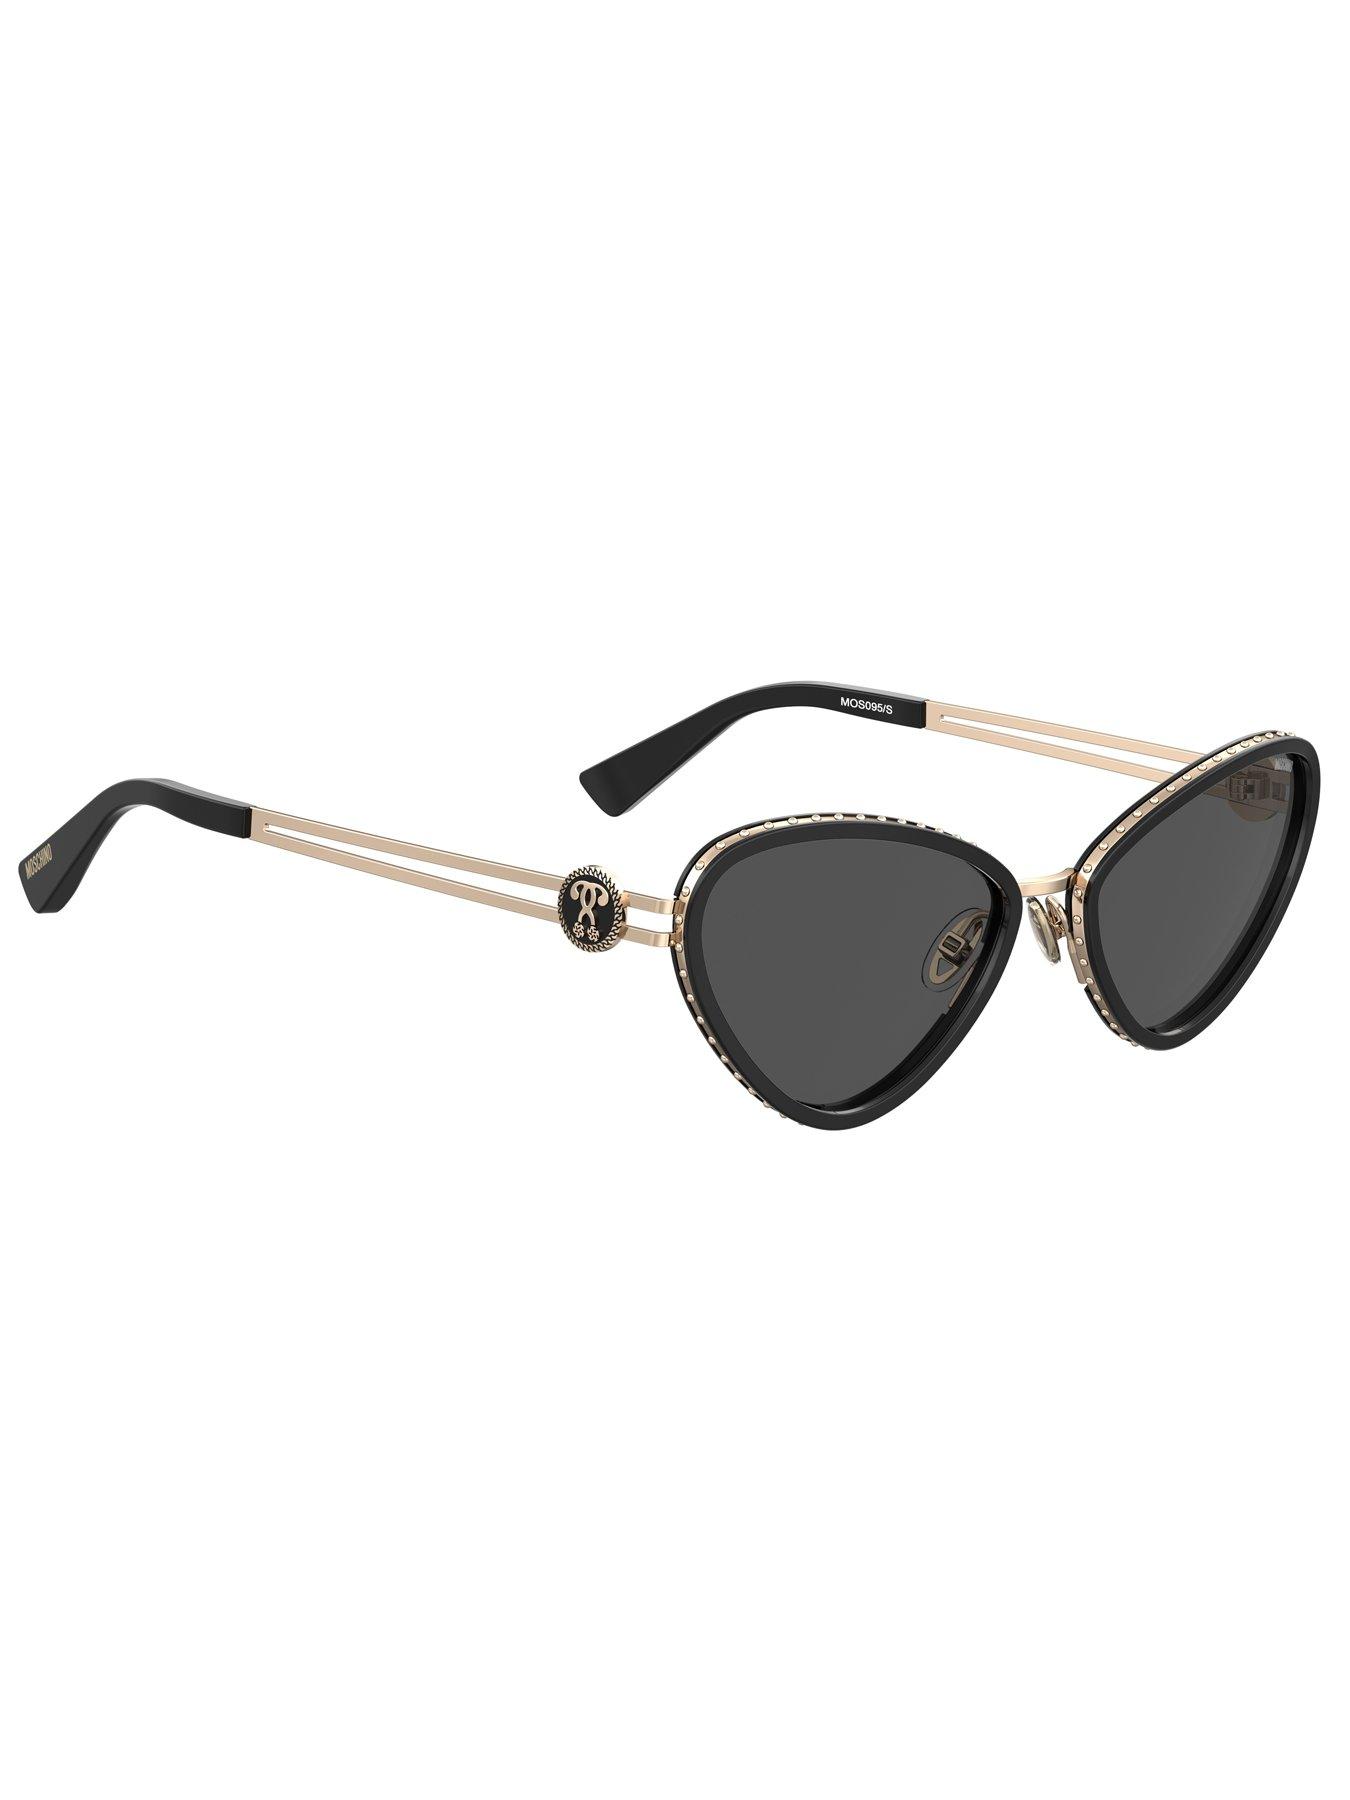 Women Cat Eye Sunglasses - Black